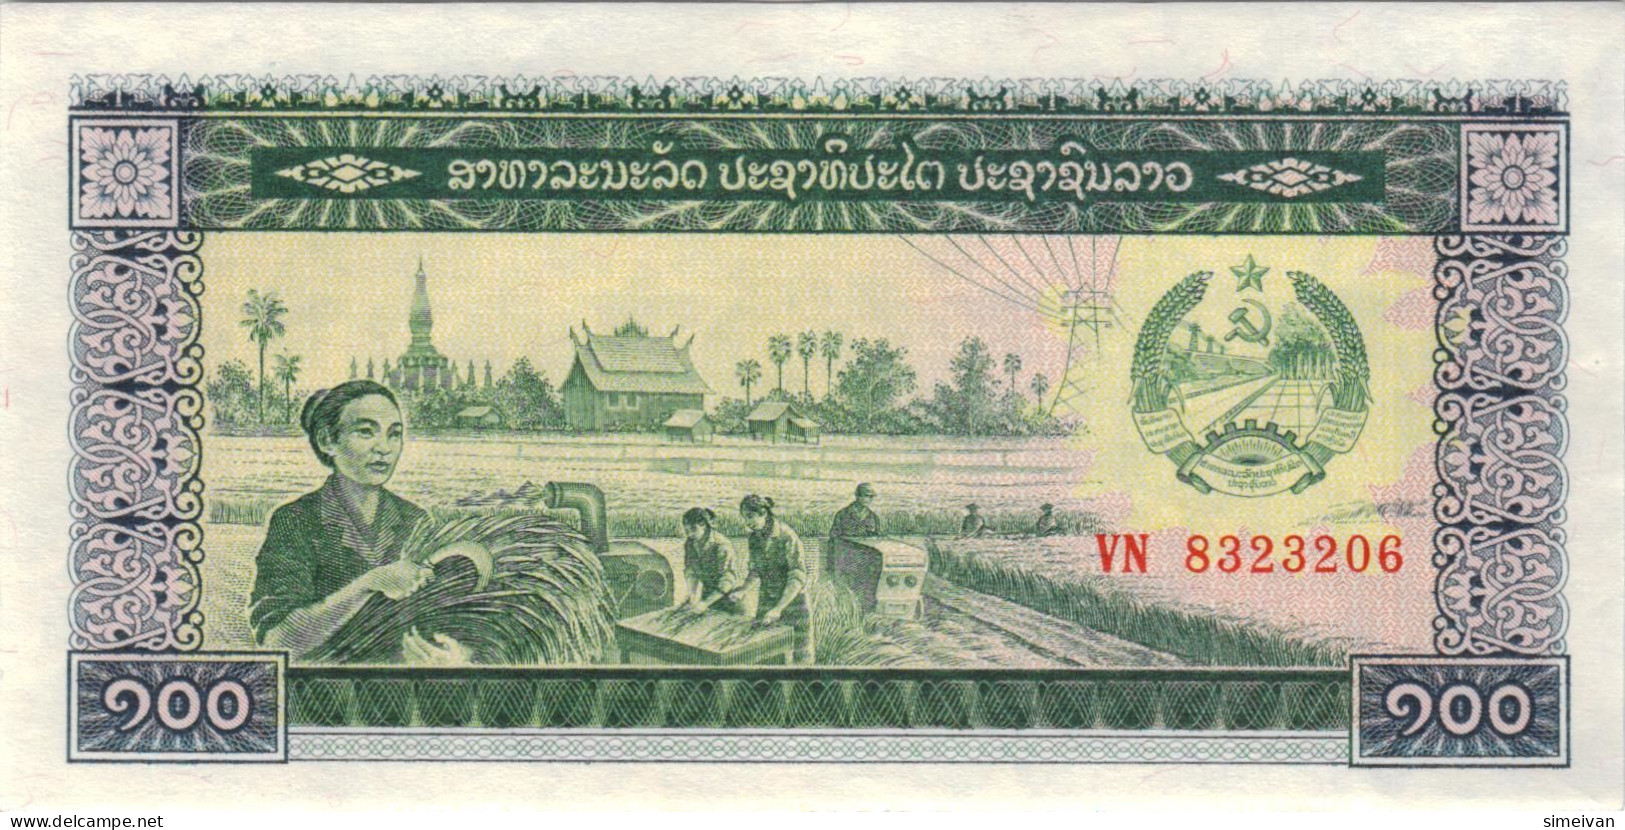 Lao 100 Kip ND (1979) P-30a UNC #4804 - Laos